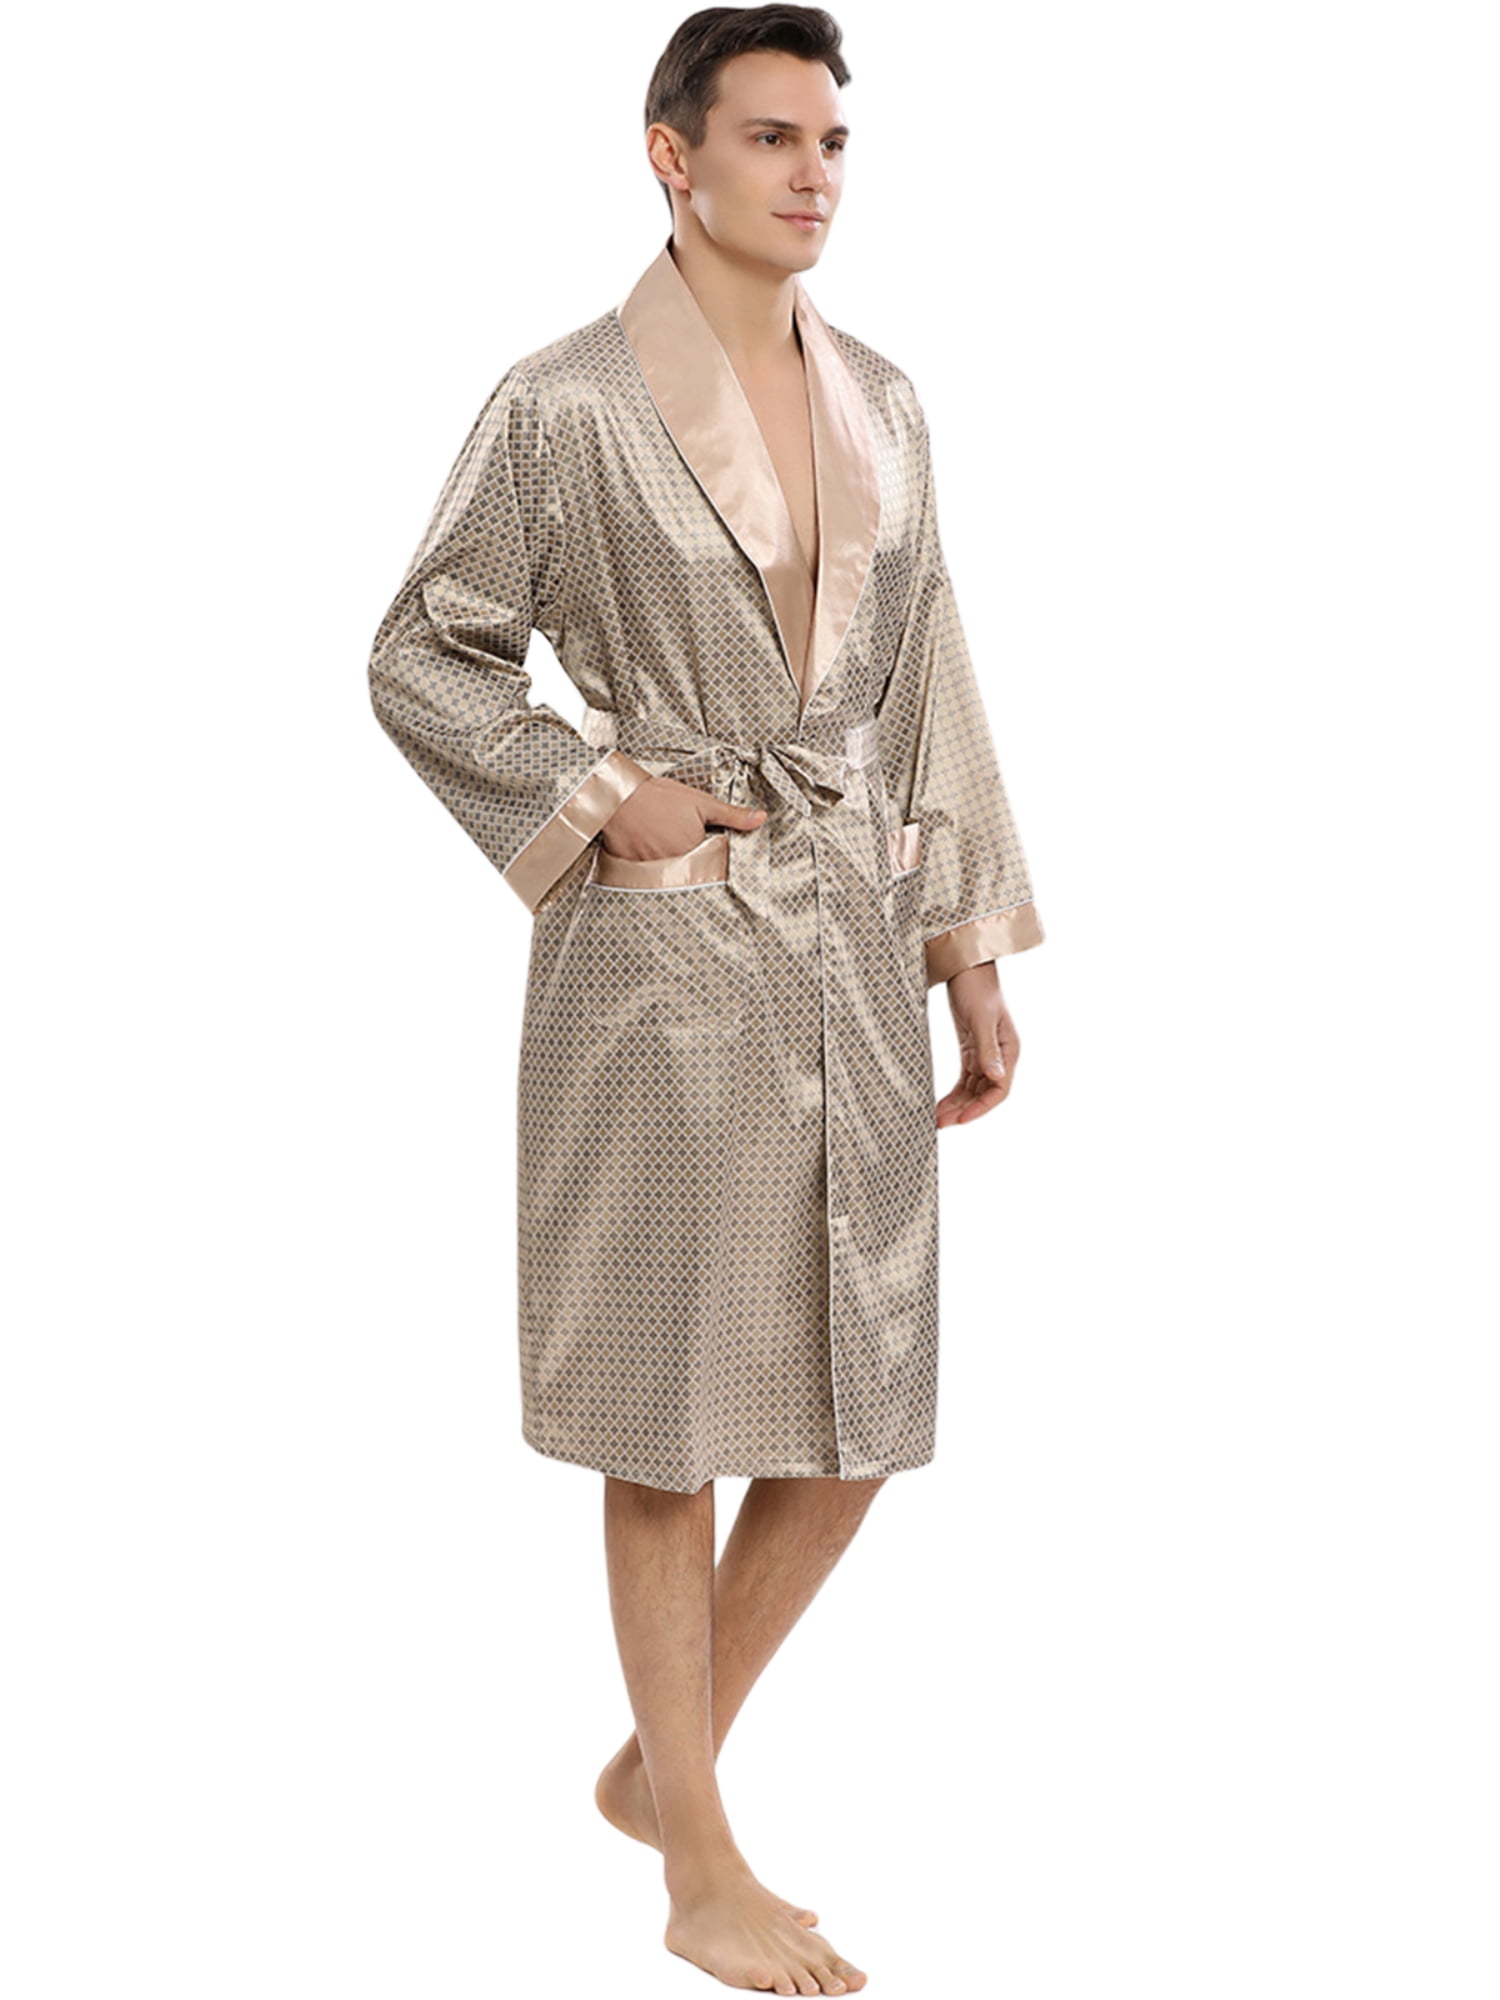 Kimono Robe Cotton Men Women Bathrobe Summer Dressing Gown Lightweight Pajamas Sleepwear Janpanes Style Loungewear Housecoat with Waist Belt for Home Holiday Swim Bath Spa